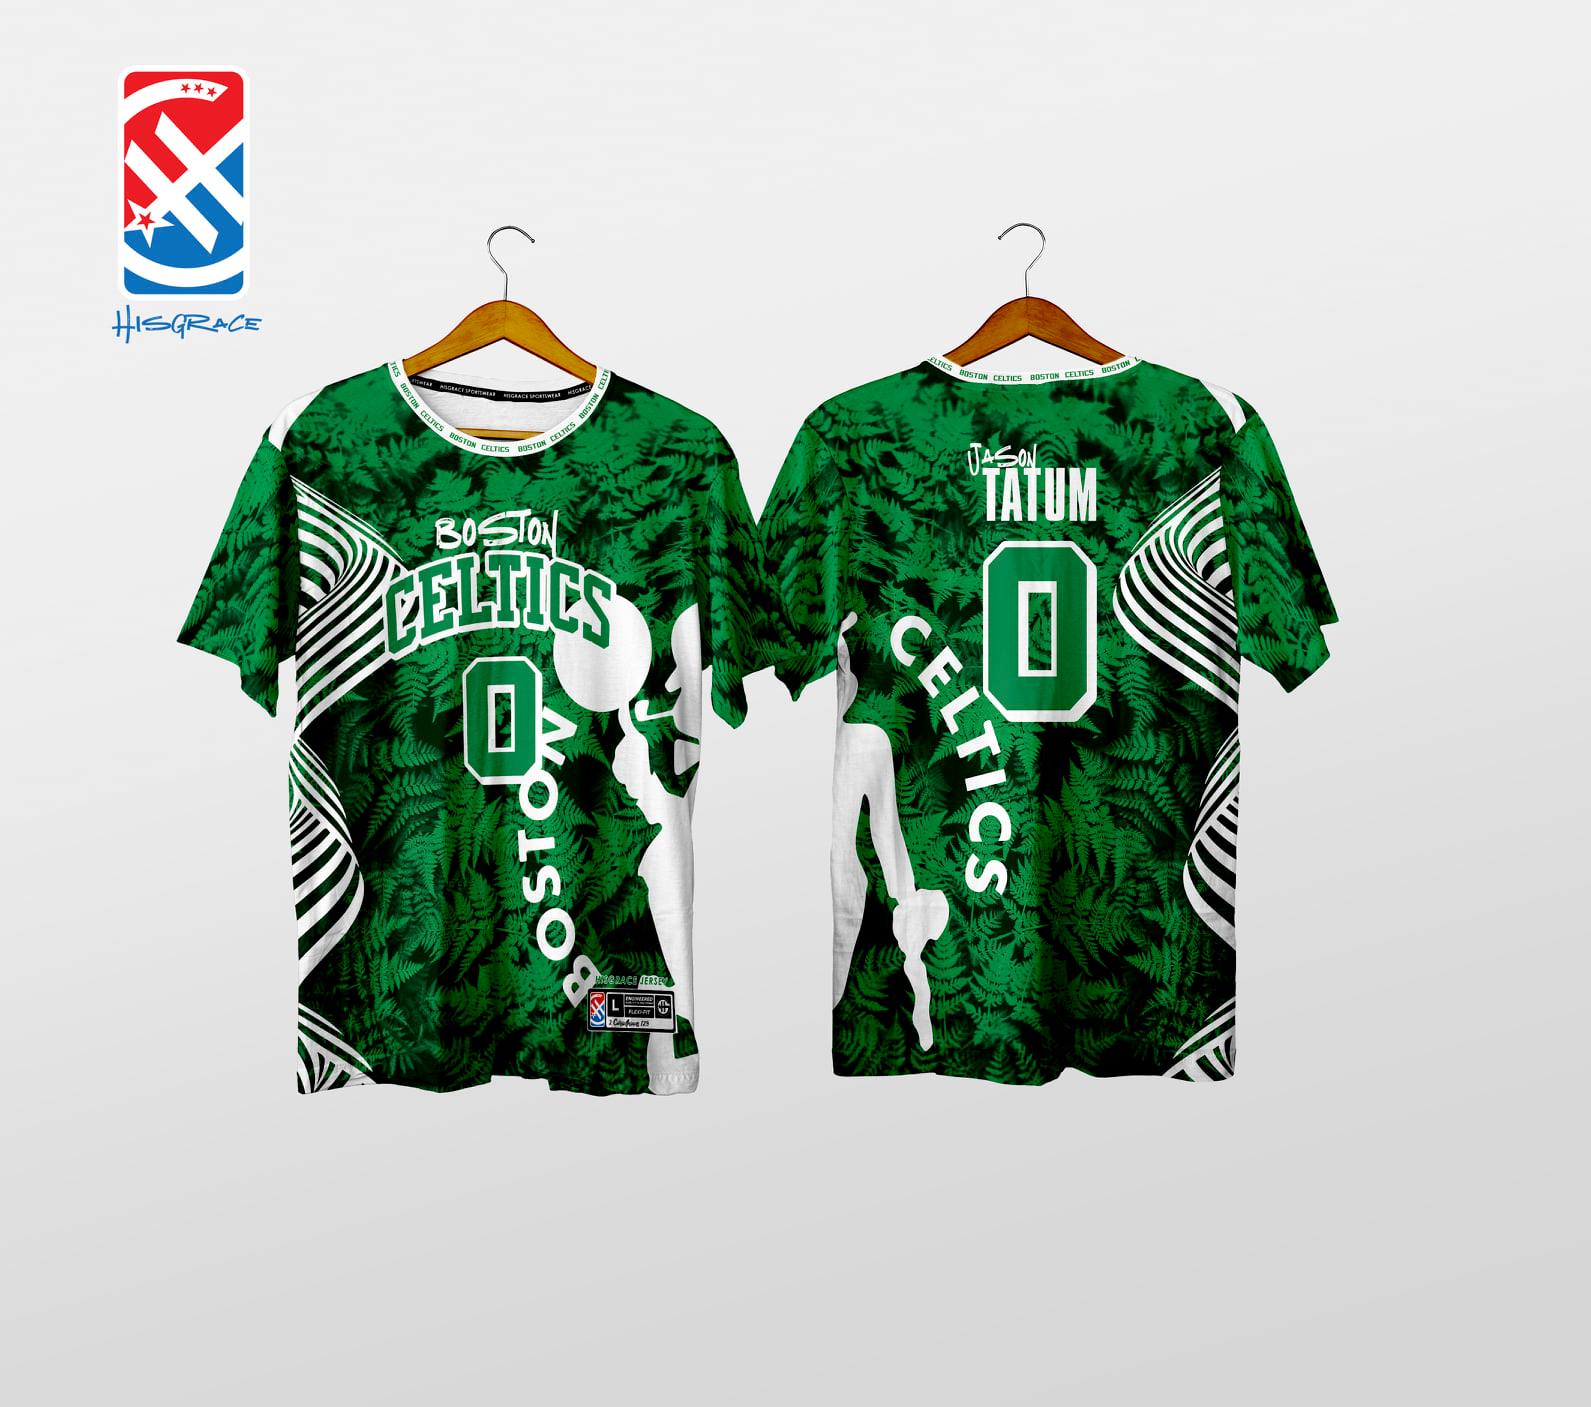 Boston Celtics Concept Jersey [TOP] - (Full Sublimation) GiRos Armor  Concepts